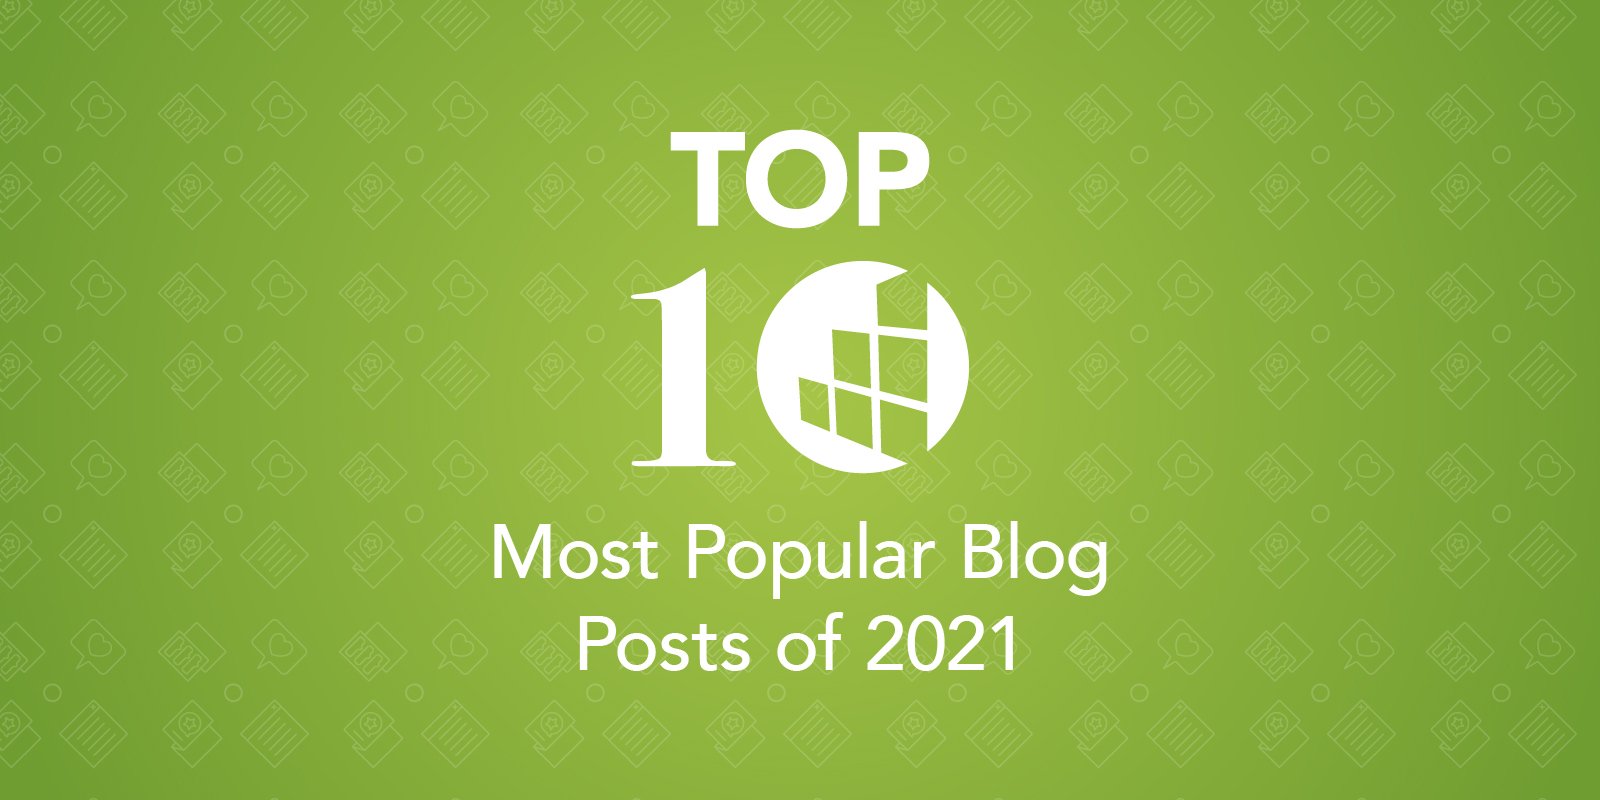 Fisher International’s Top 10 Blog Posts of 2021